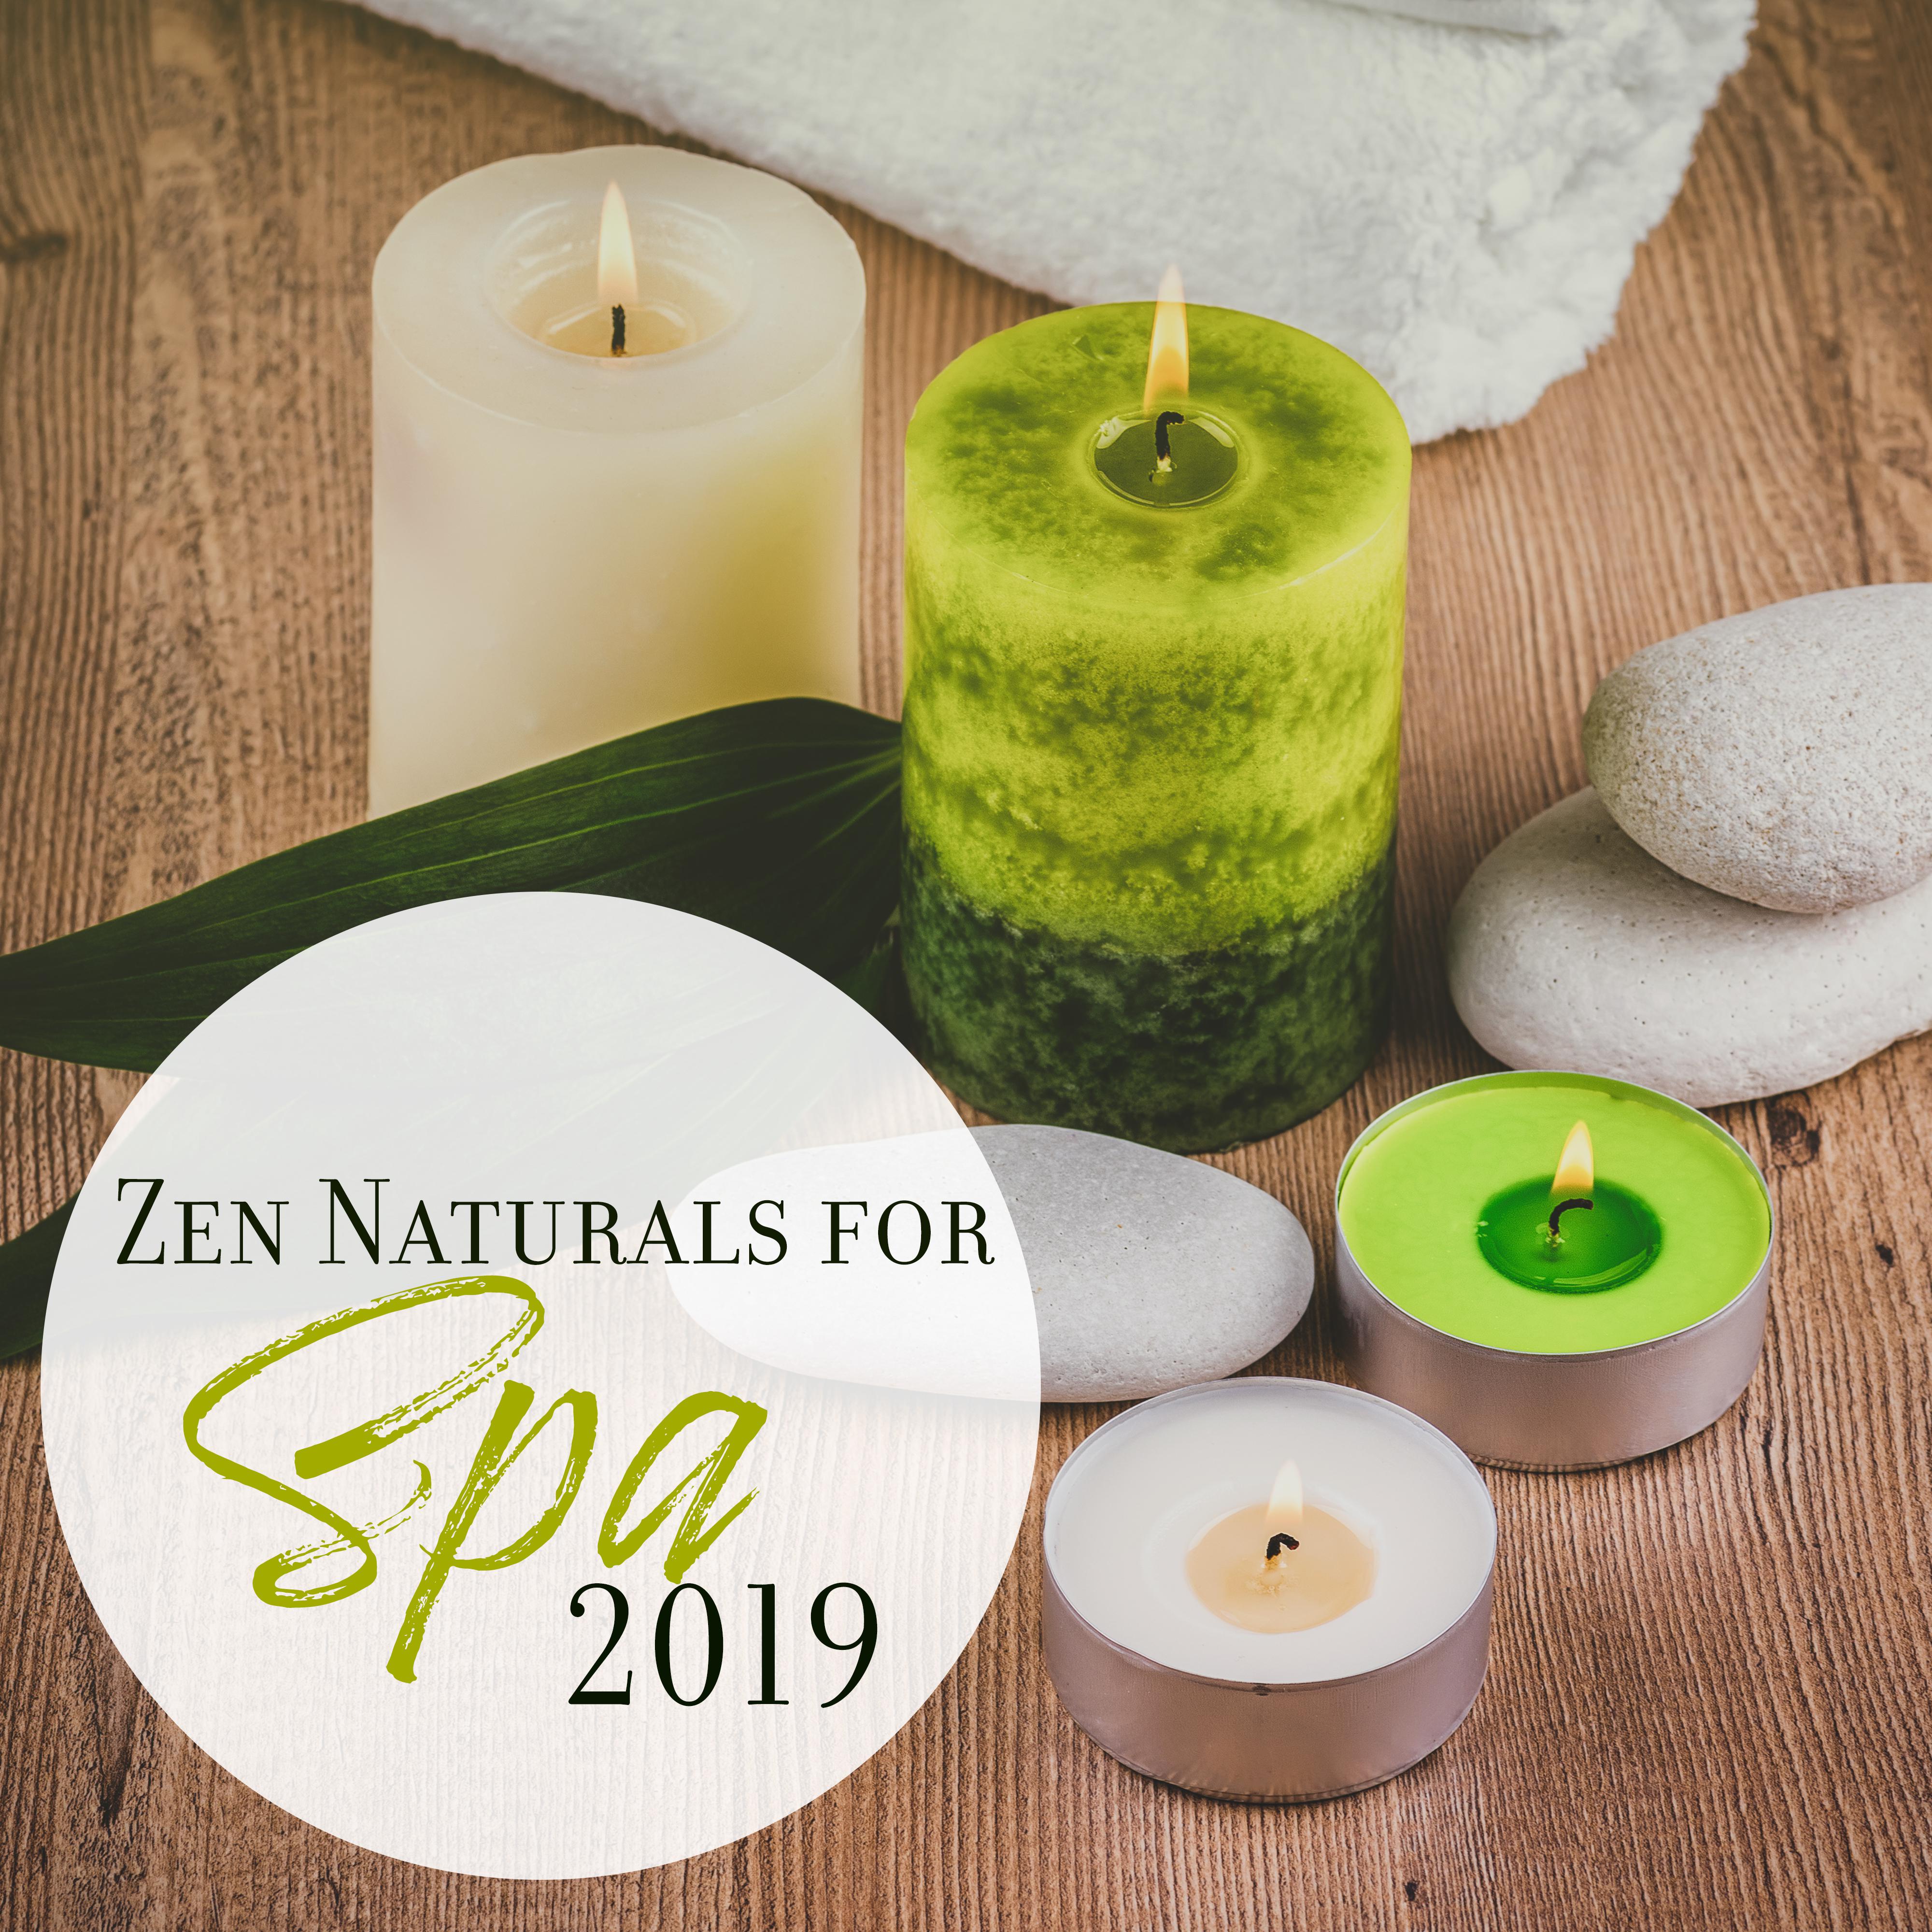 Zen Naturals for Spa 2019  New Age Relaxing Nature Sounds Music for Wellness, Massage  Sauna